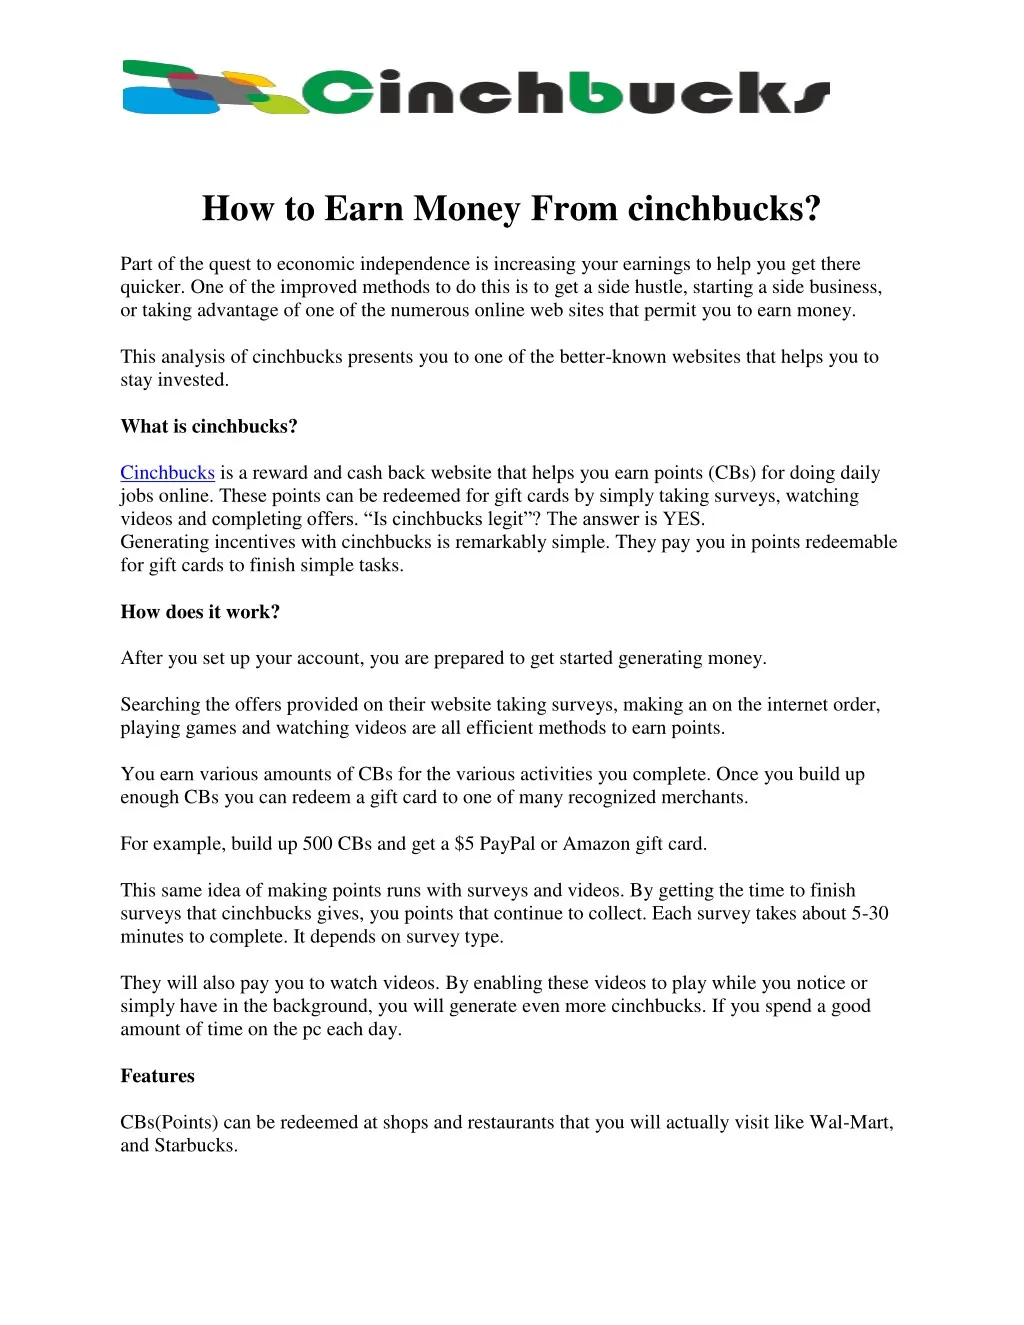 how to earn money from cinchbucks